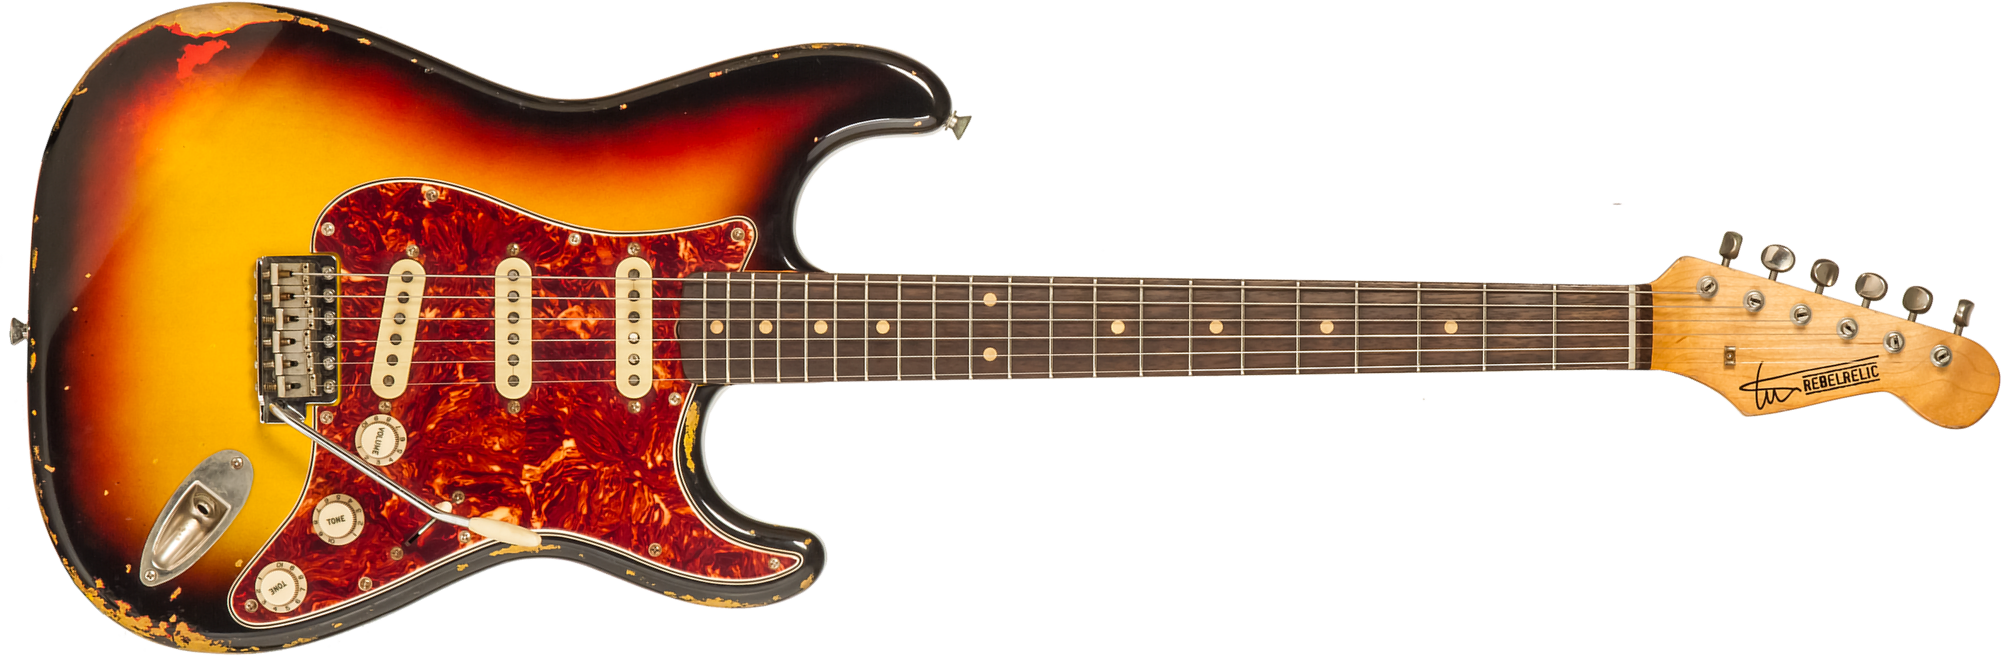 Rebelrelic S-series 1962 3s Trem Rw #231009 - 3-tone Sunburst - Guitarra eléctrica con forma de str. - Main picture